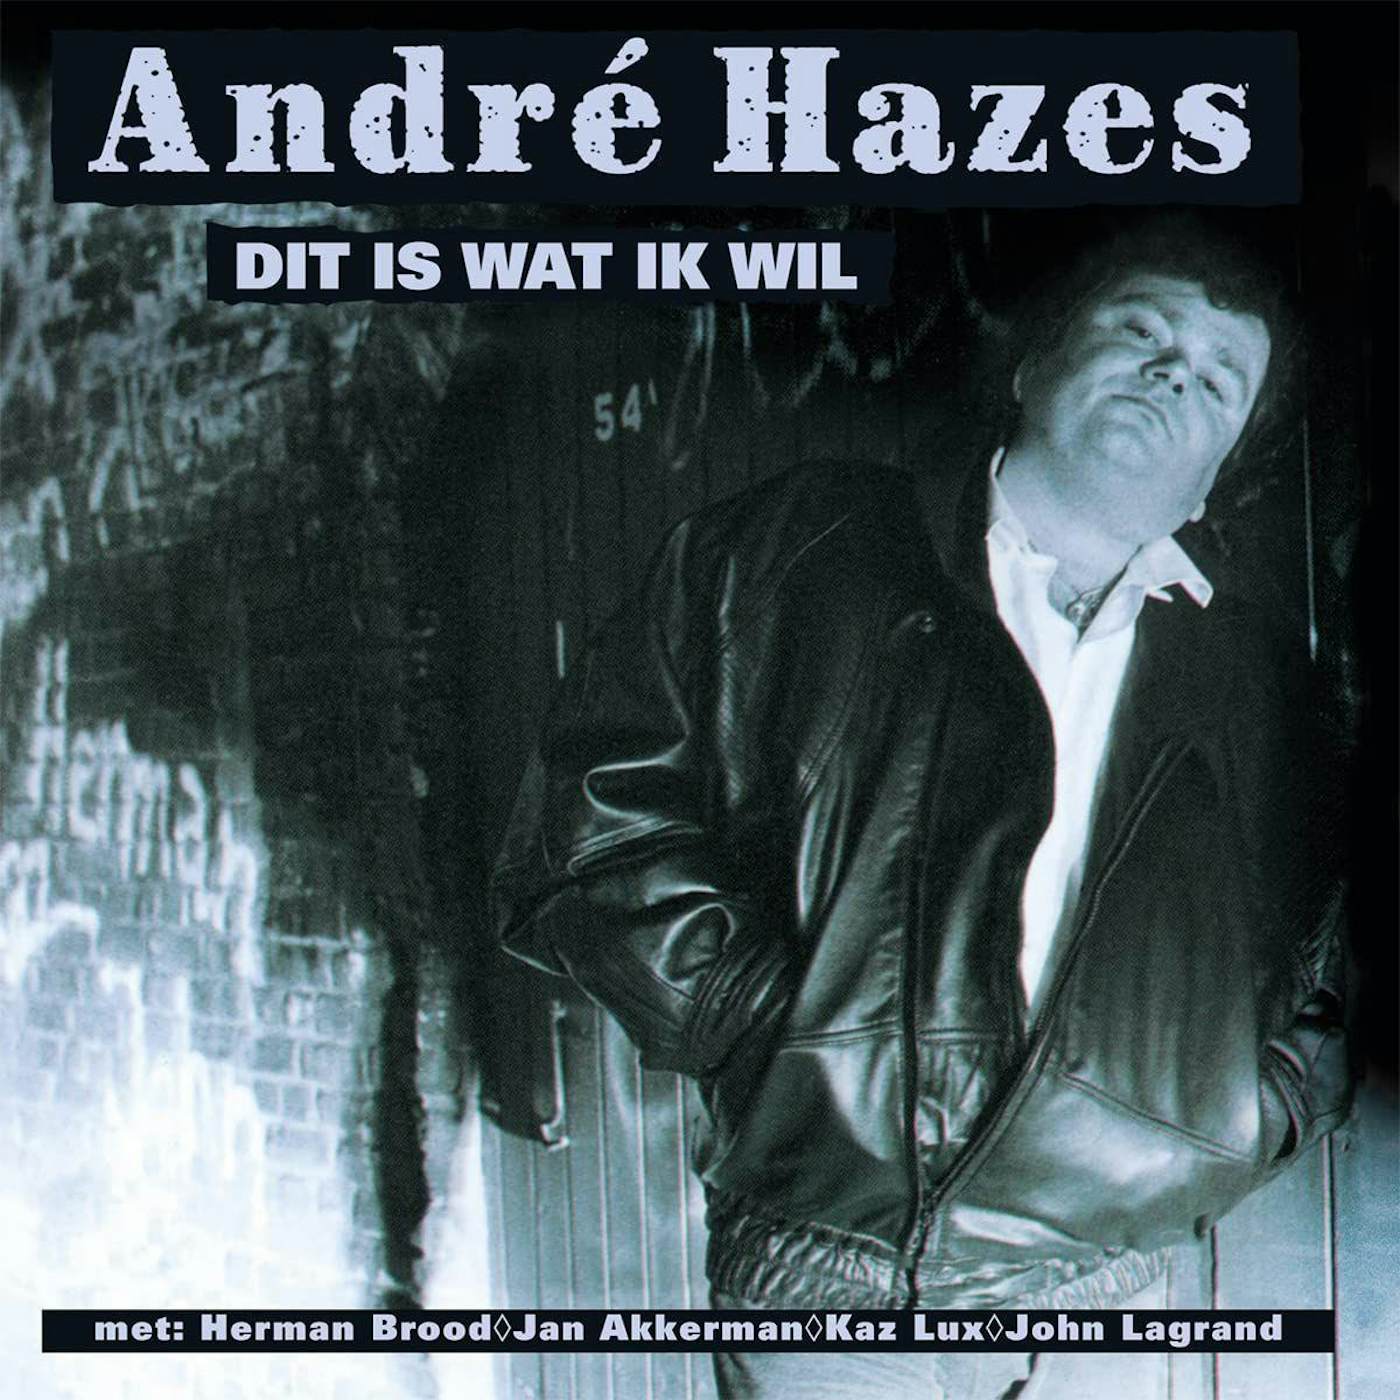 Andre Hazes Dit Is Wat Ik Wil (Limited Blue) Vinyl Record